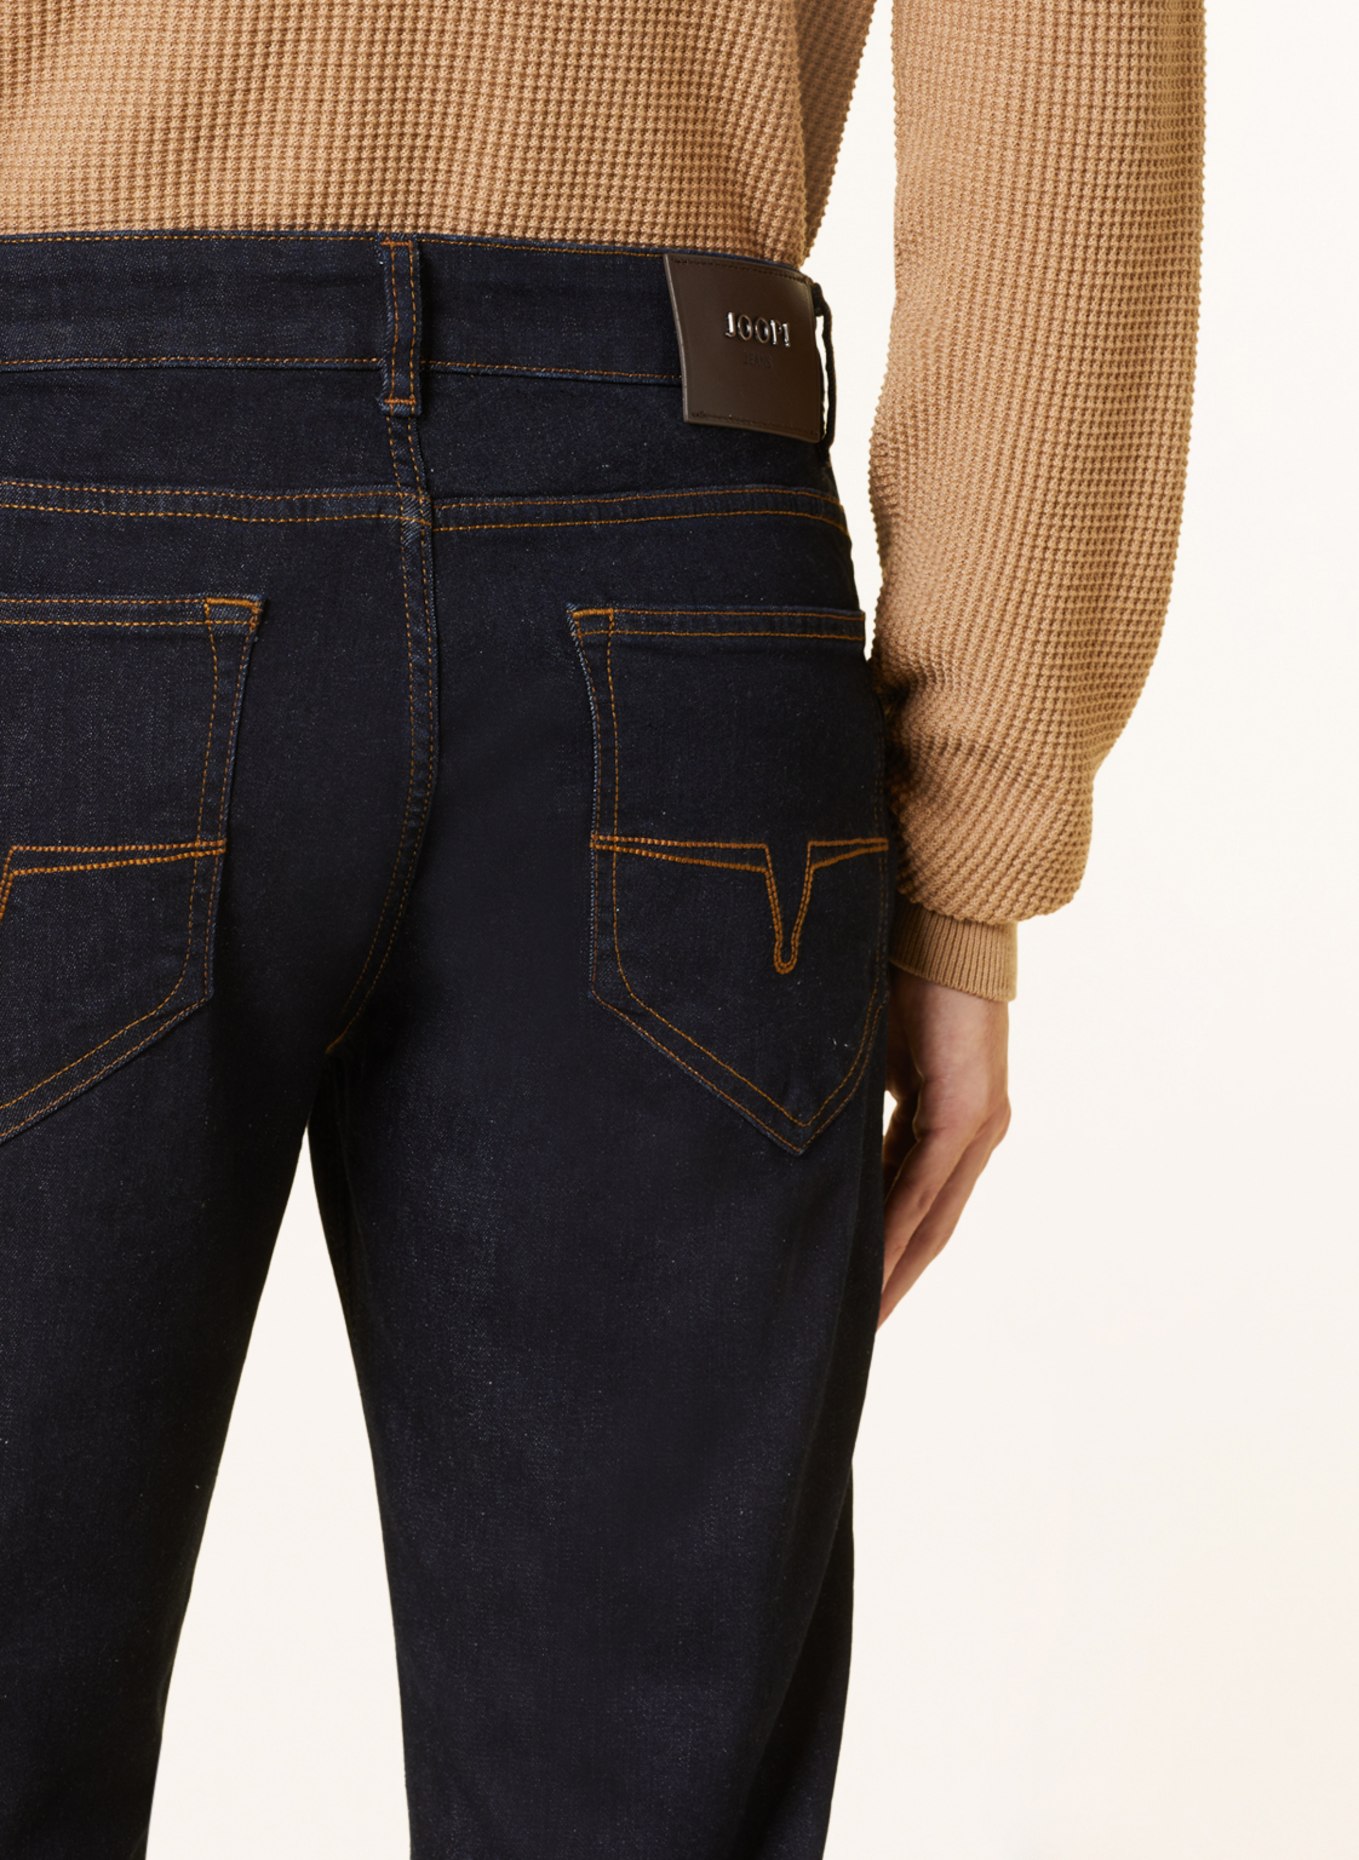 JOOP! JEANS Jeans MITCH modern fit in 402 dark blue 402 | Stretchjeans